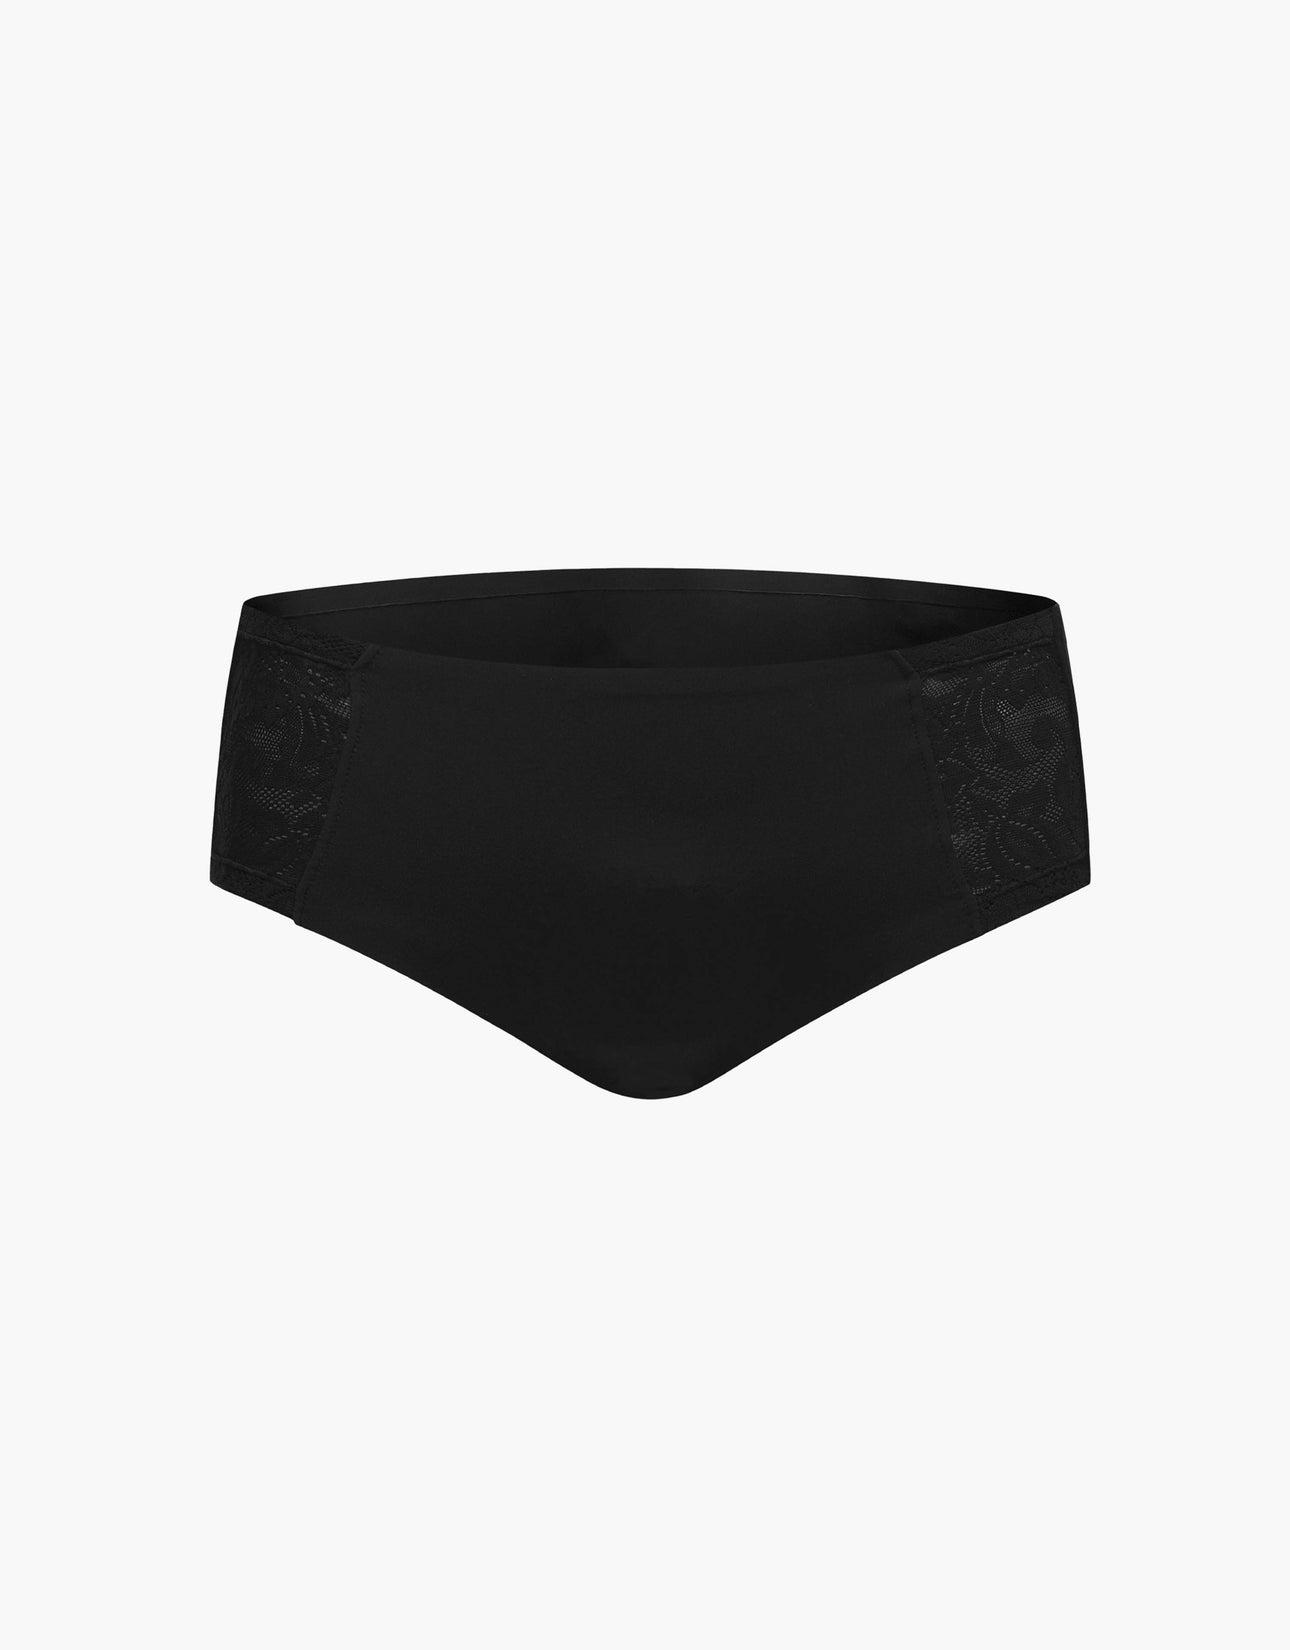 Hipster Sport Underwear : Noir Lace - Women\'s | SHREDLY